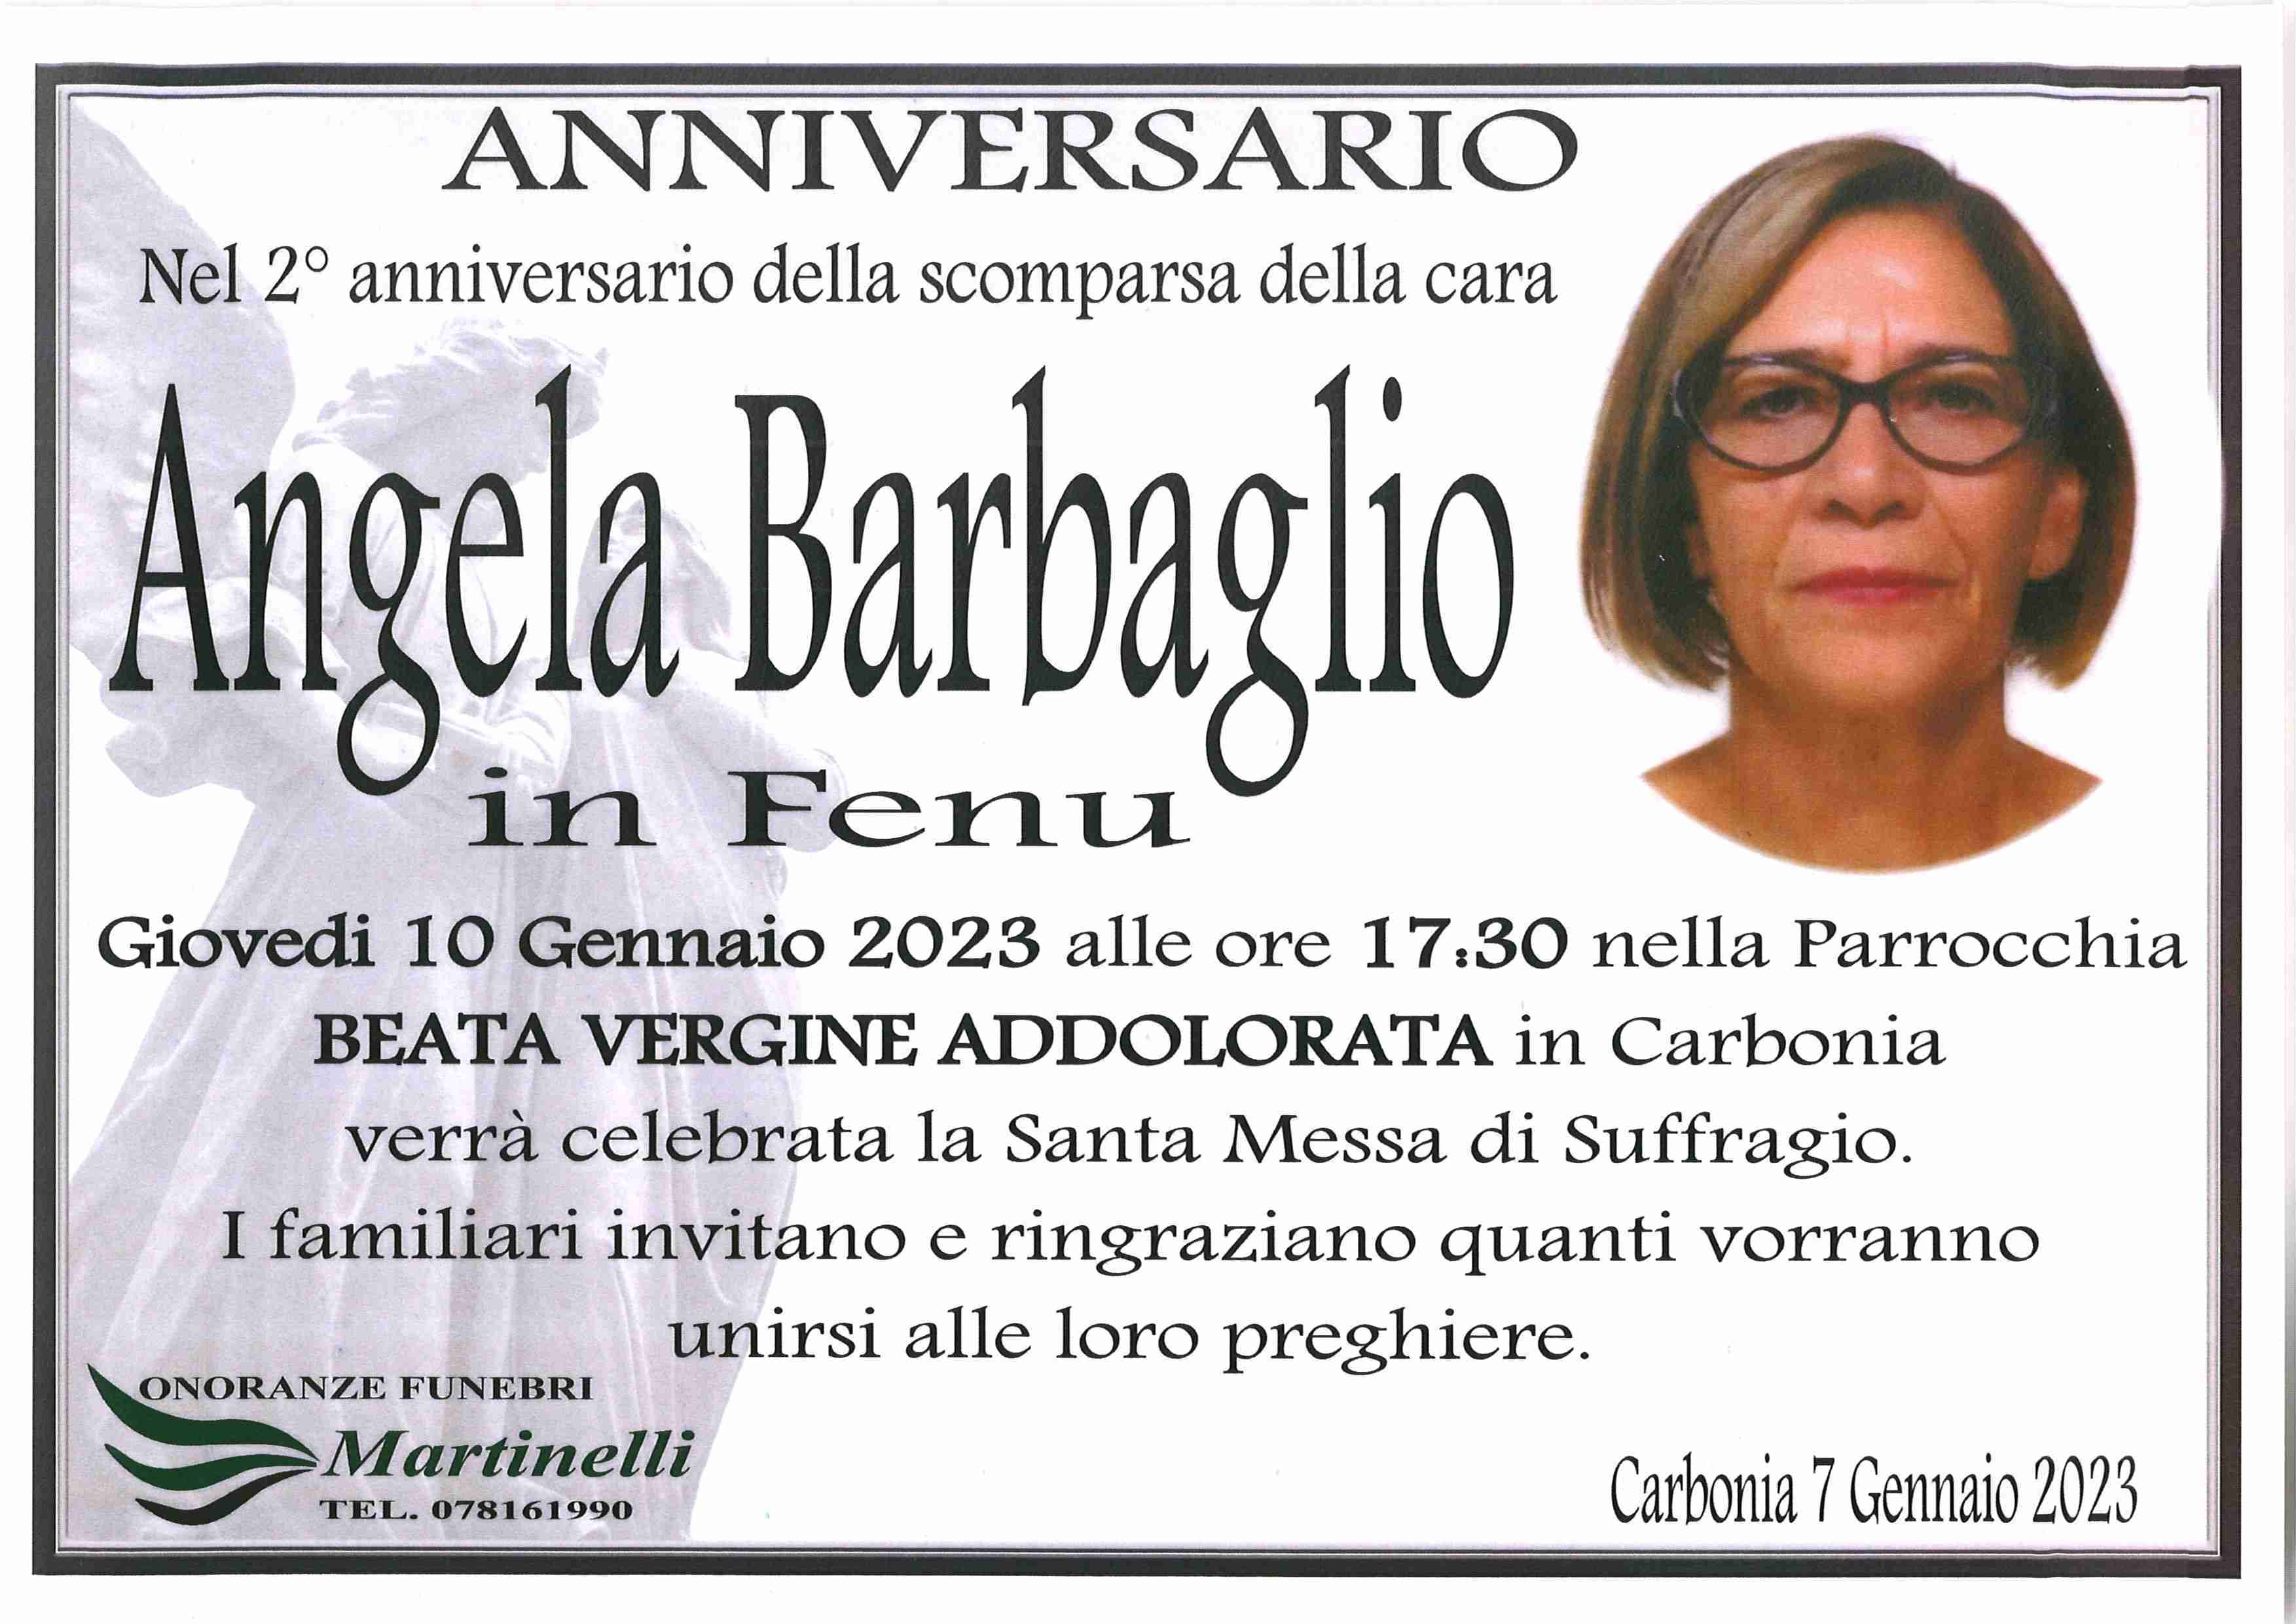 Angela Barbaglio